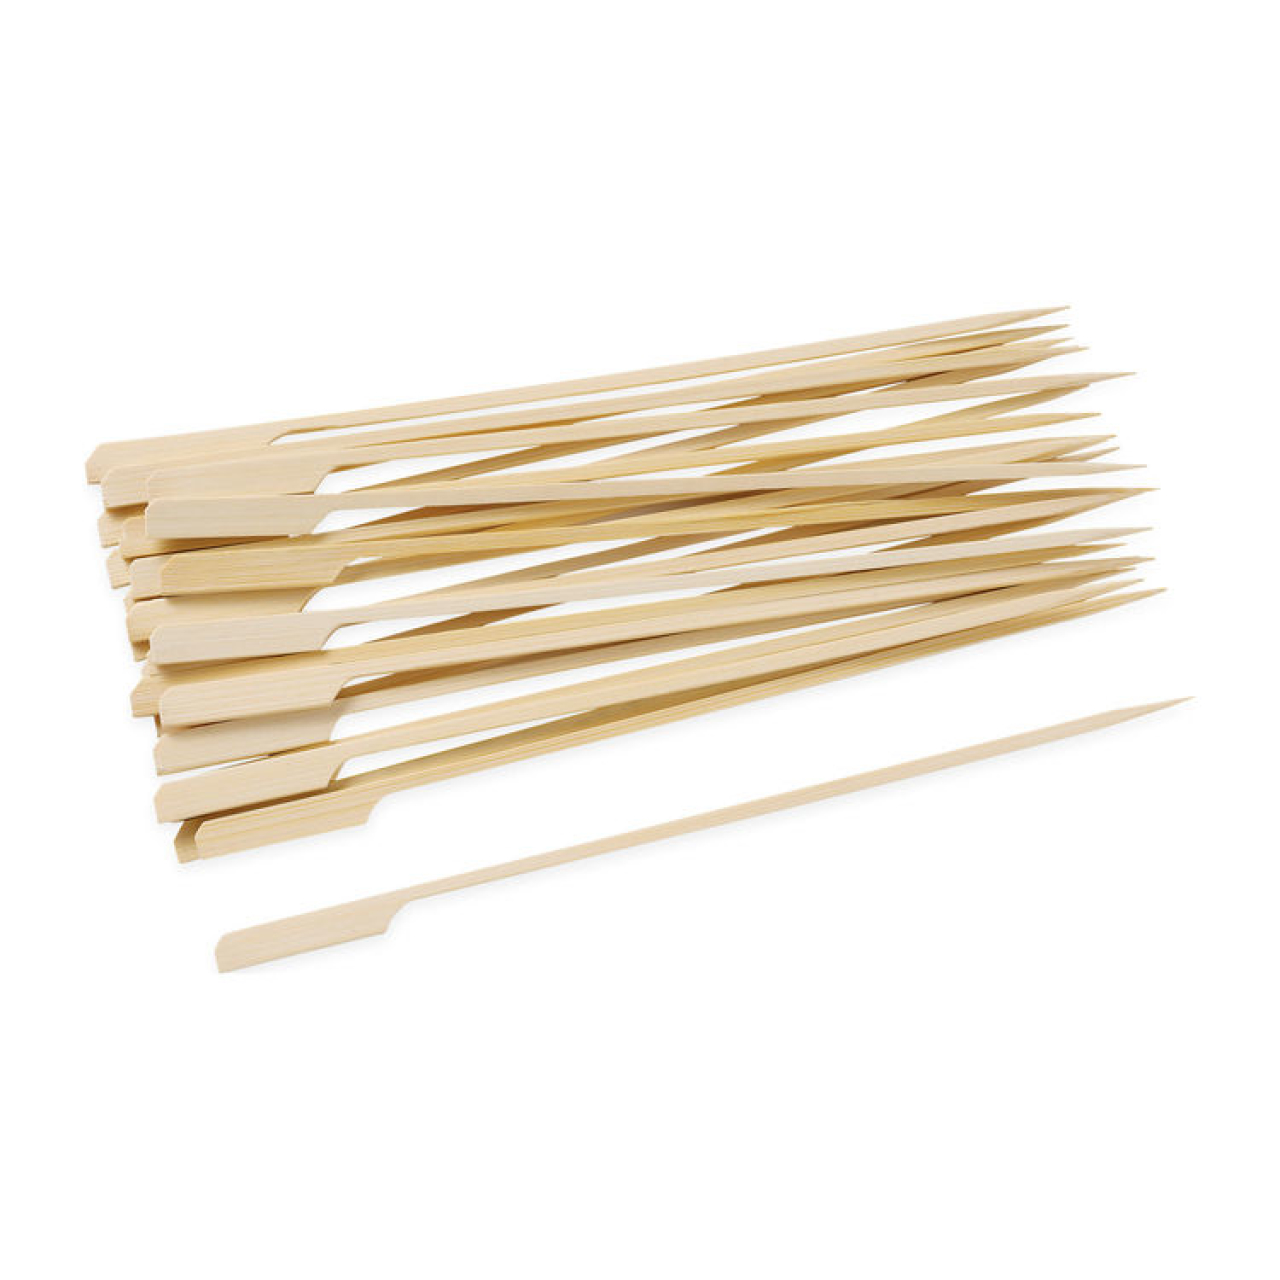 Original Bambus Spieße 25 Stk